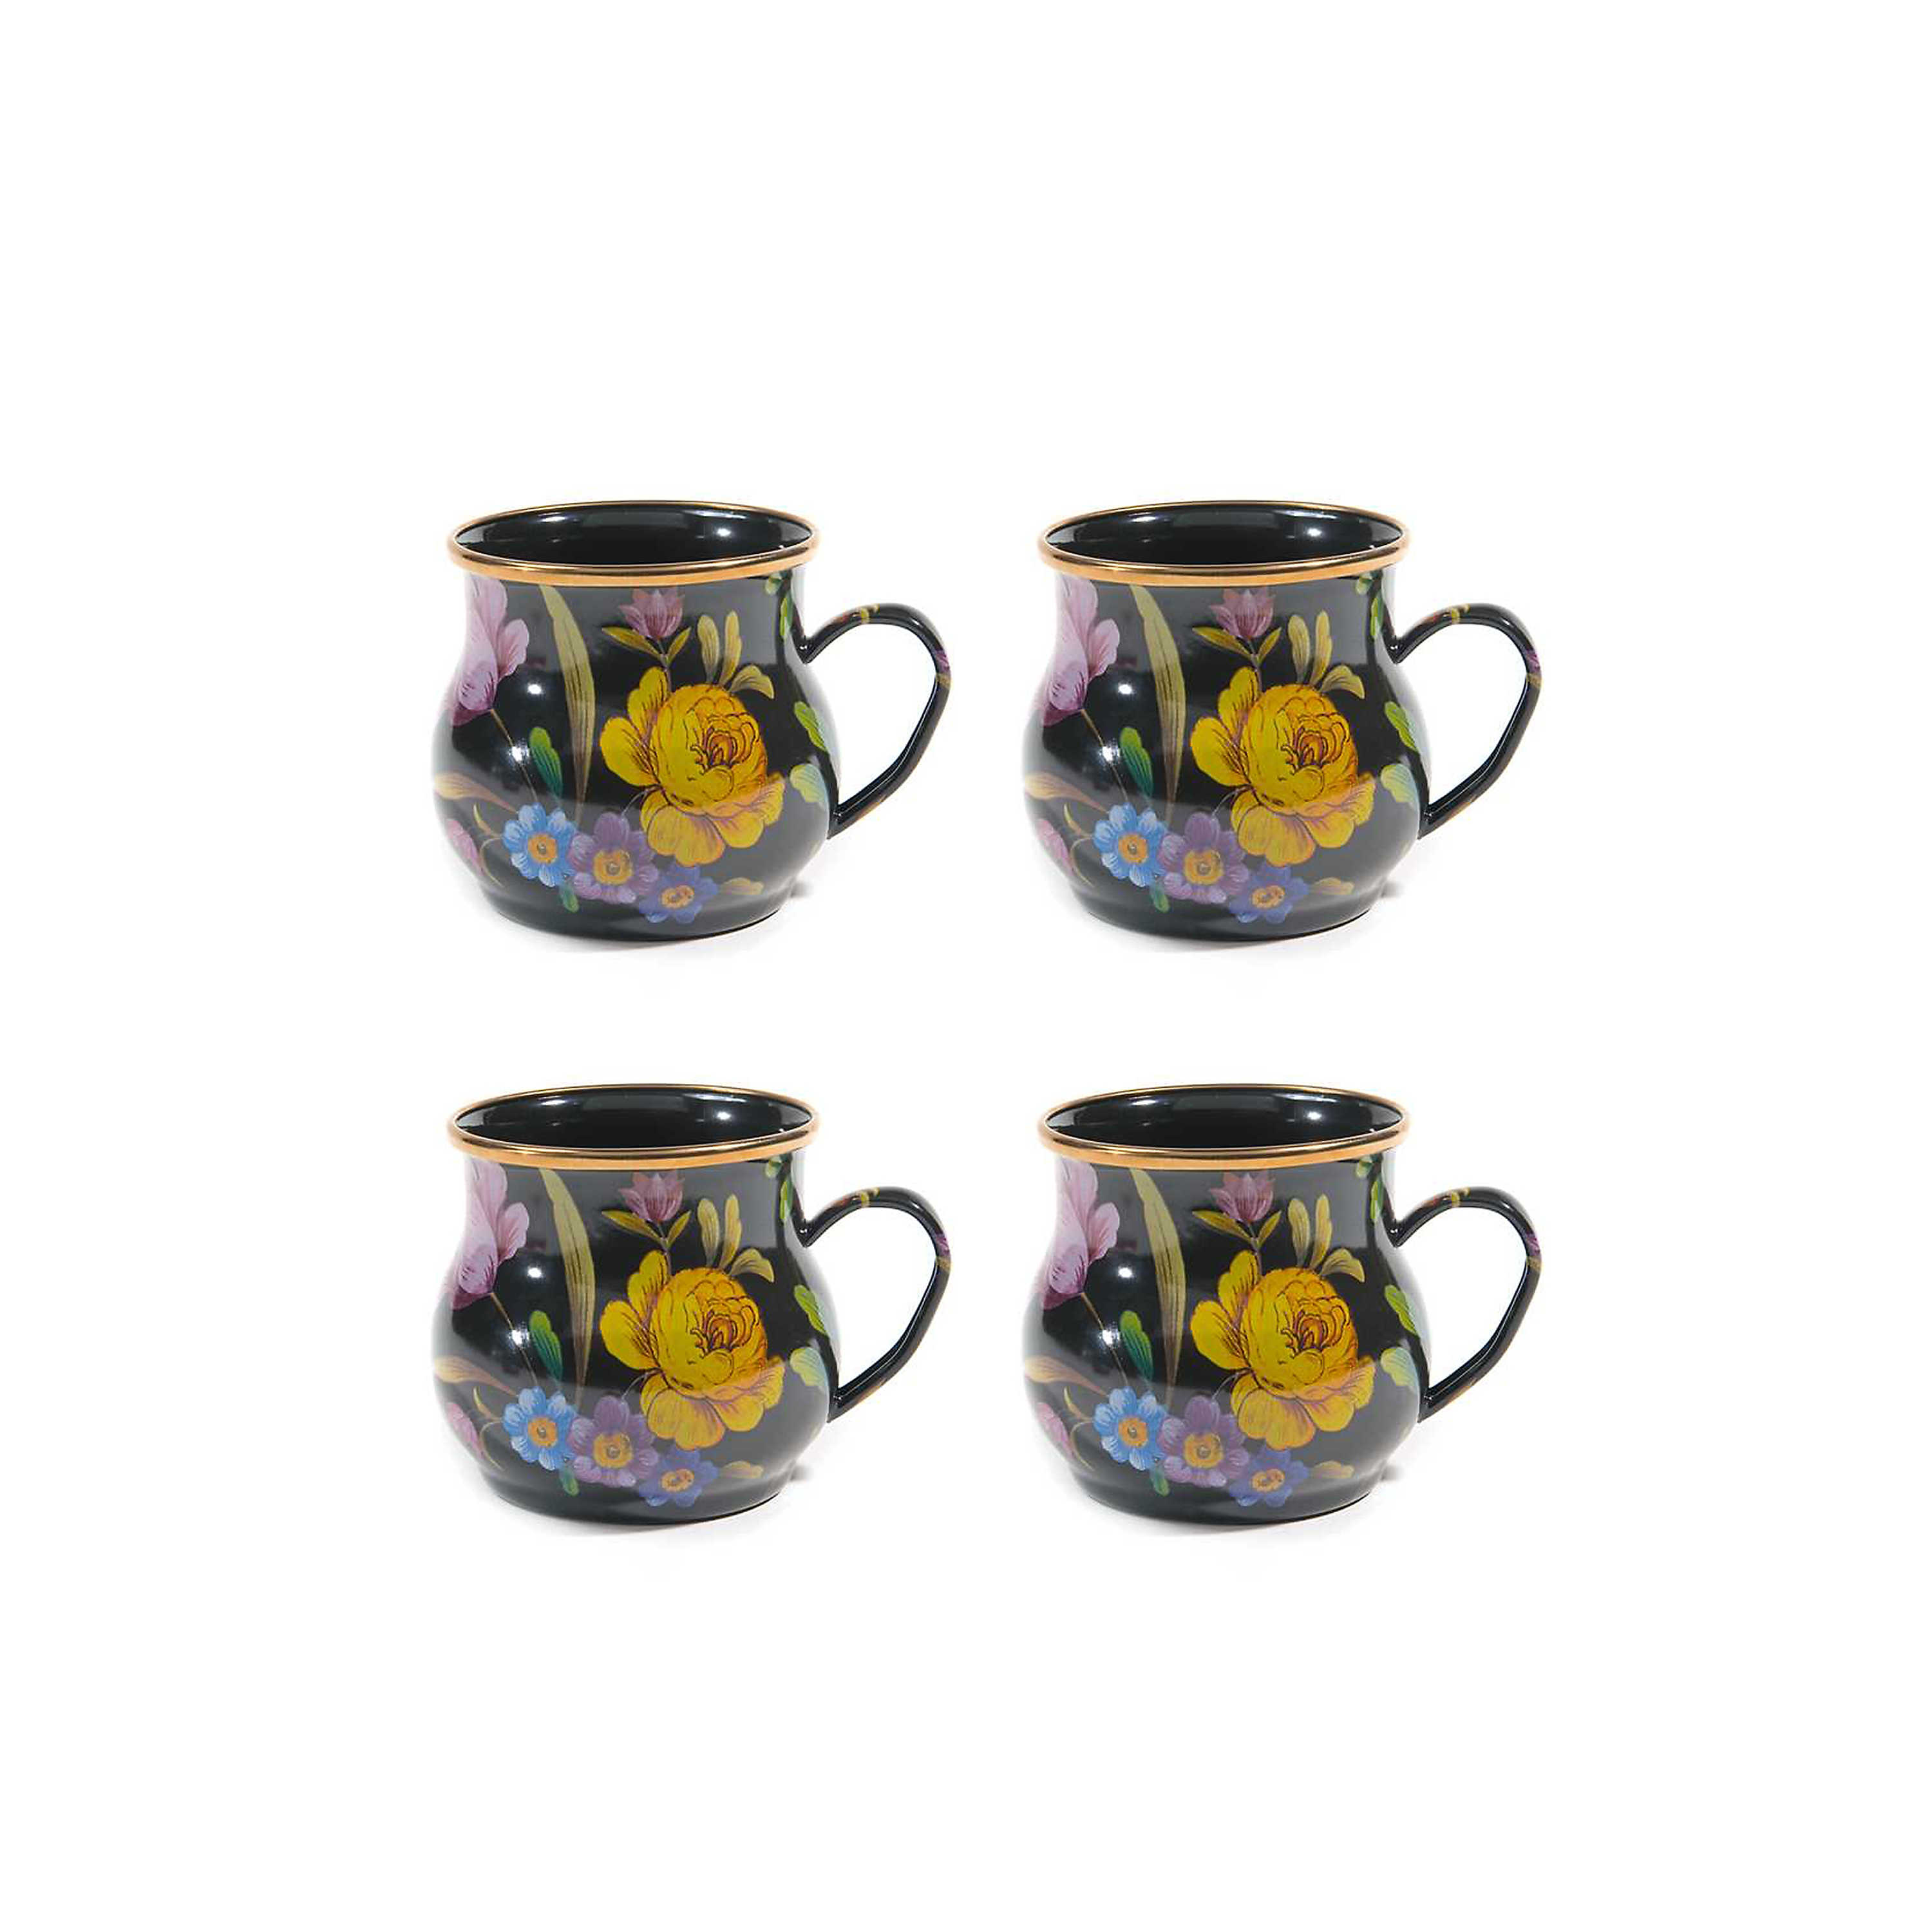 Black Flower Market Mugs, Set of 4 mackenzie-childs Panama 0